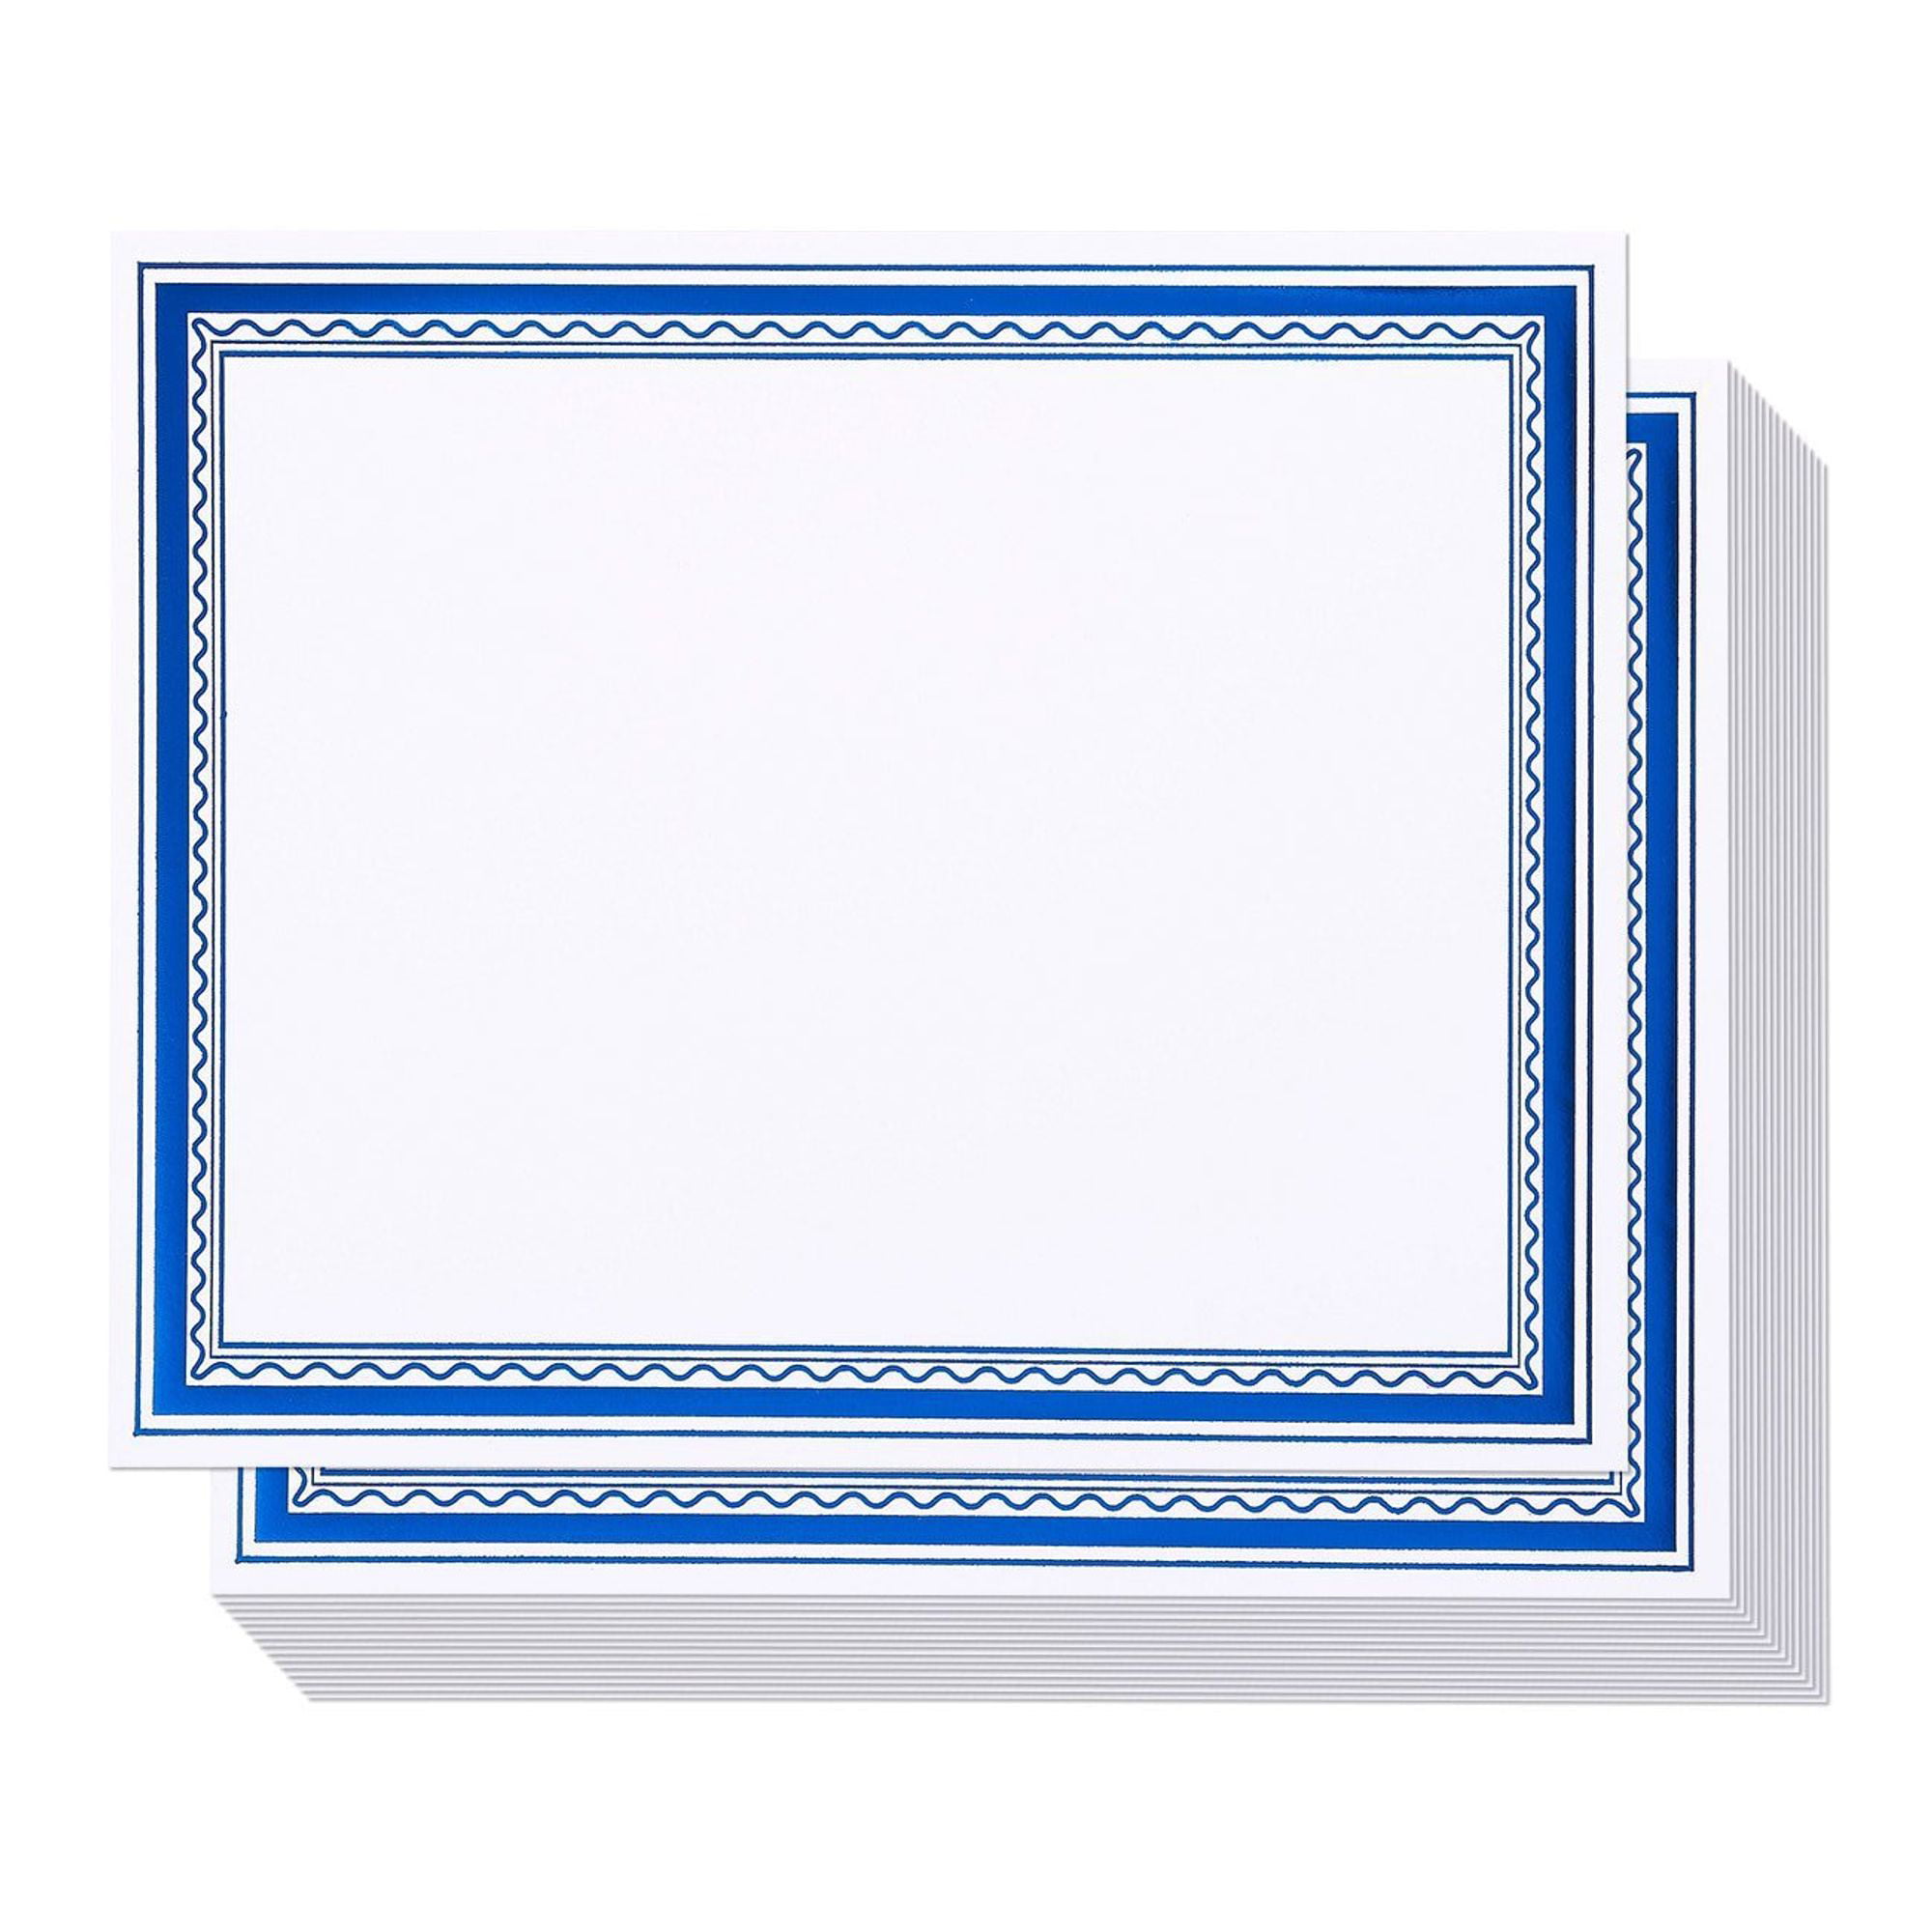 50-sheet-award-certificate-papers-letter-sized-for-diploma-blue-foil-border-printer-friendly